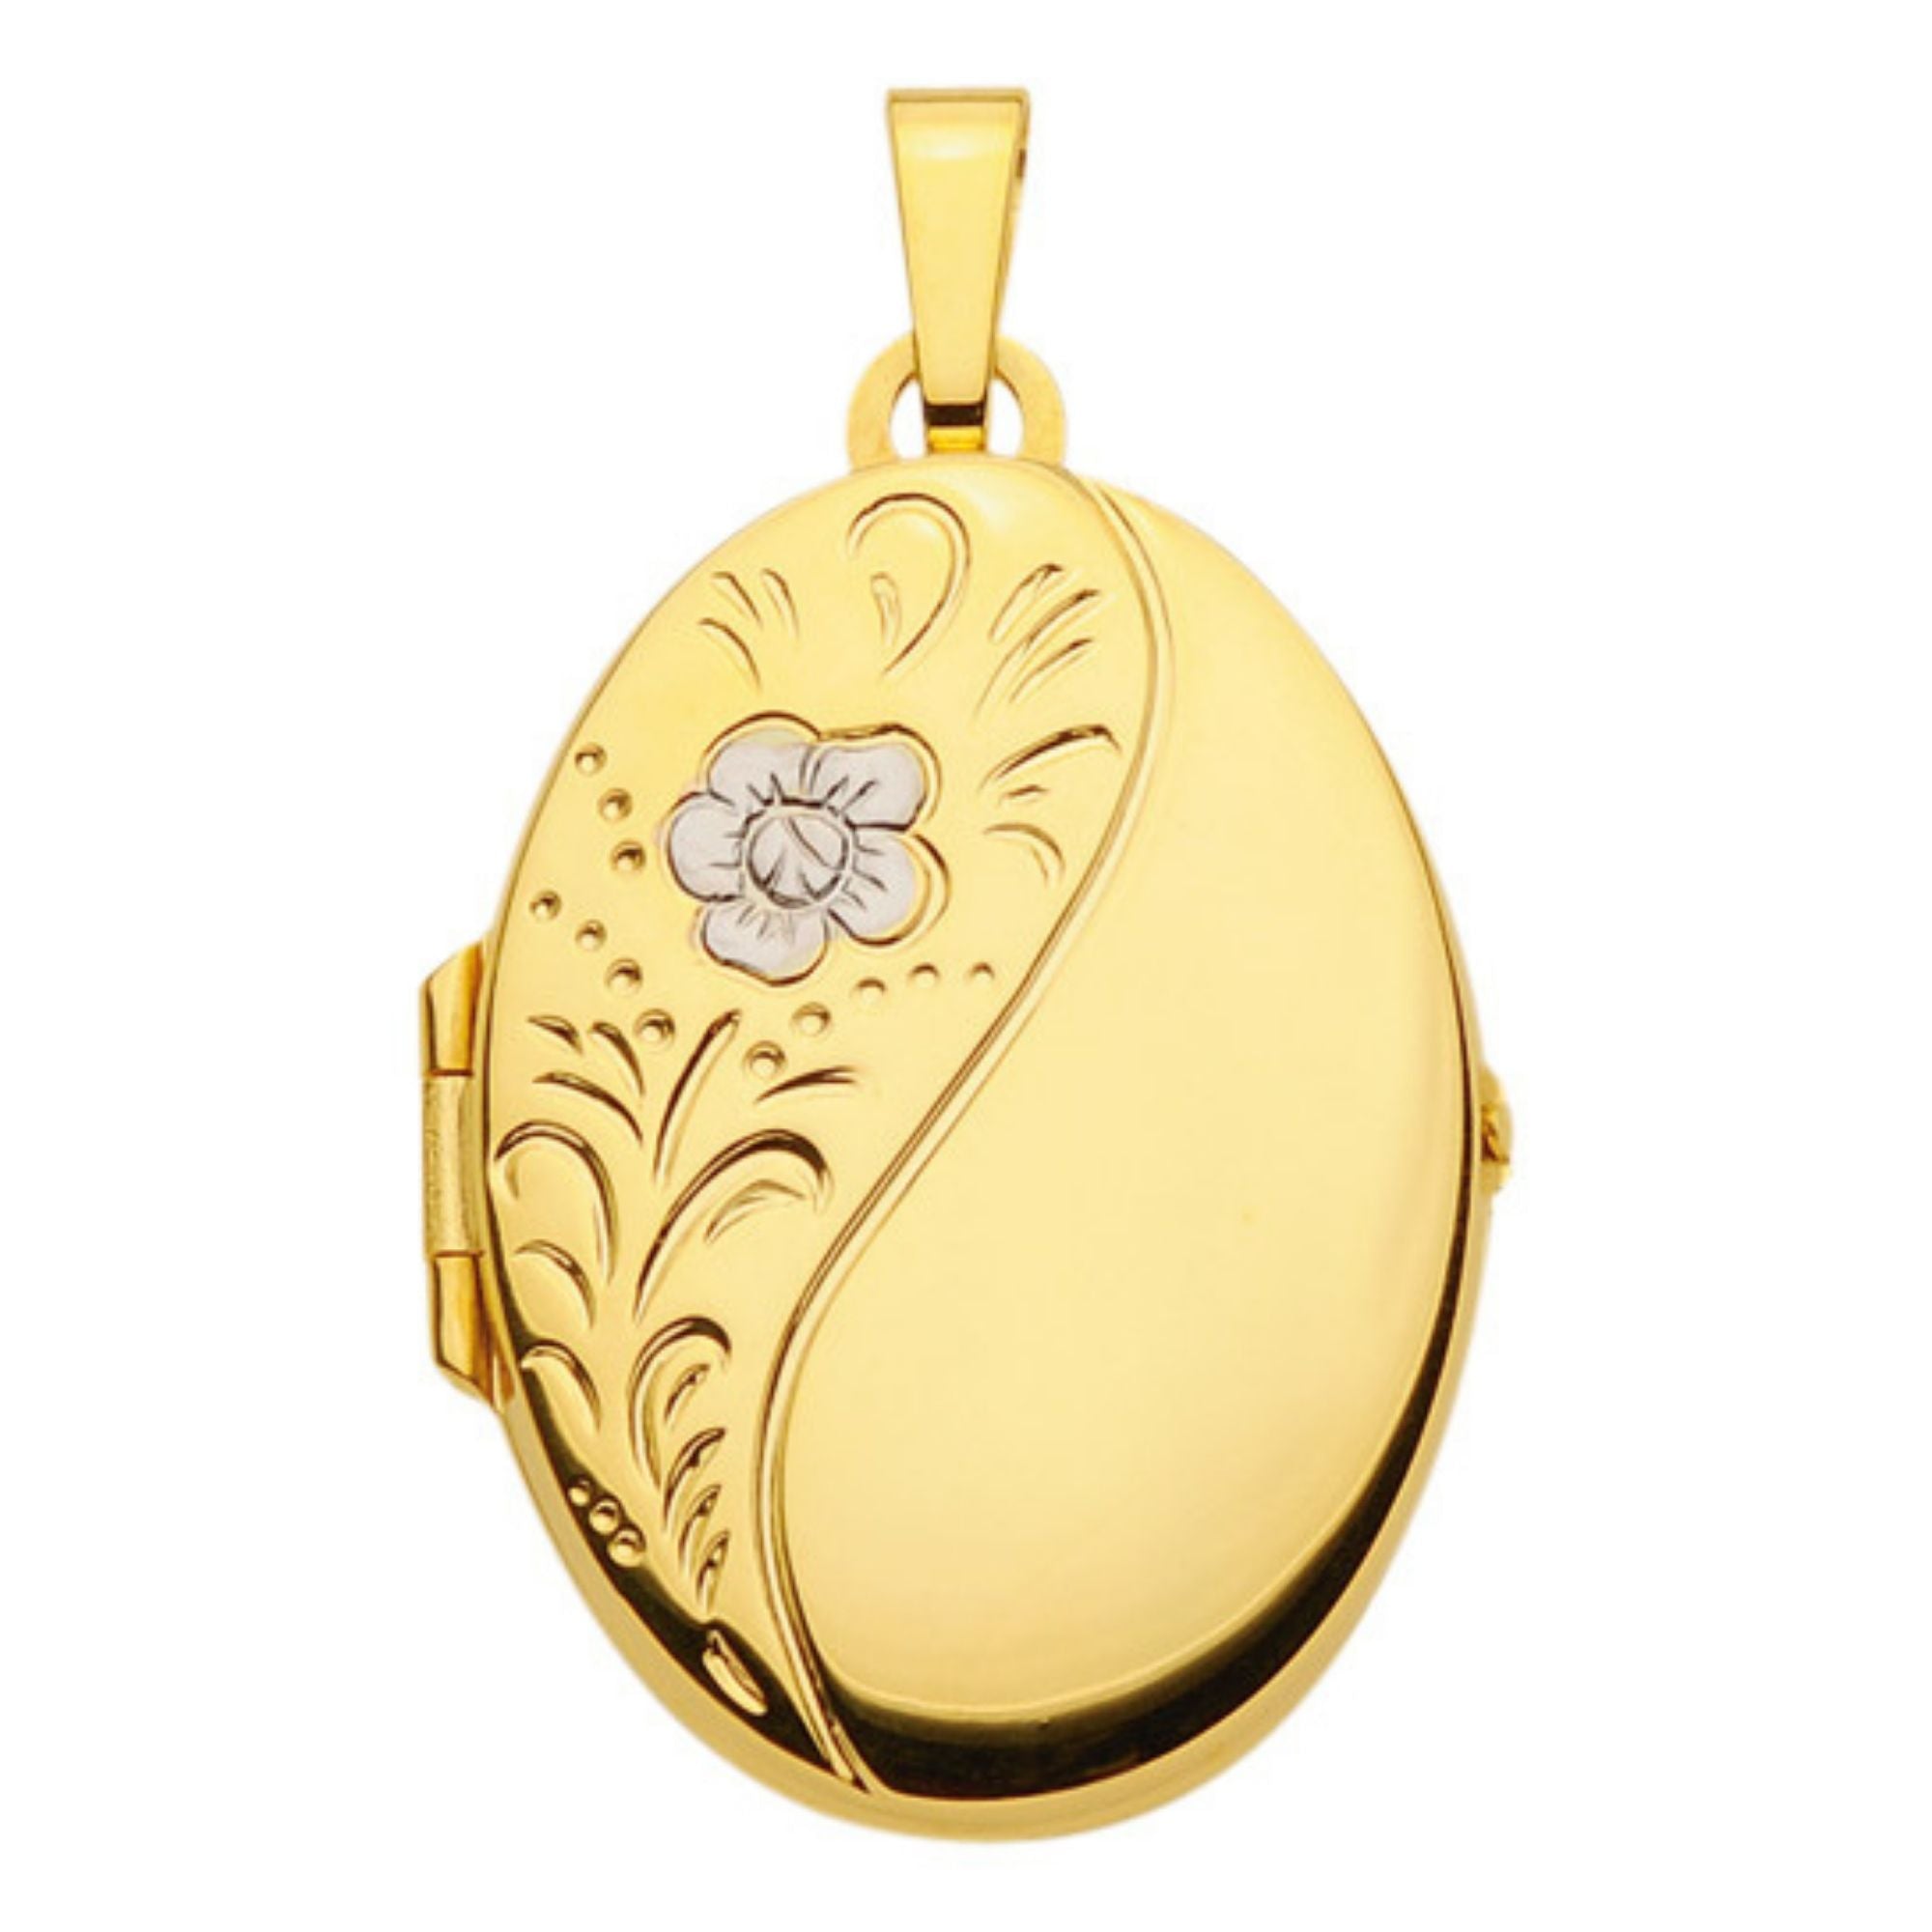 Ovales Medaillon aus Gold mit Blumenmuster